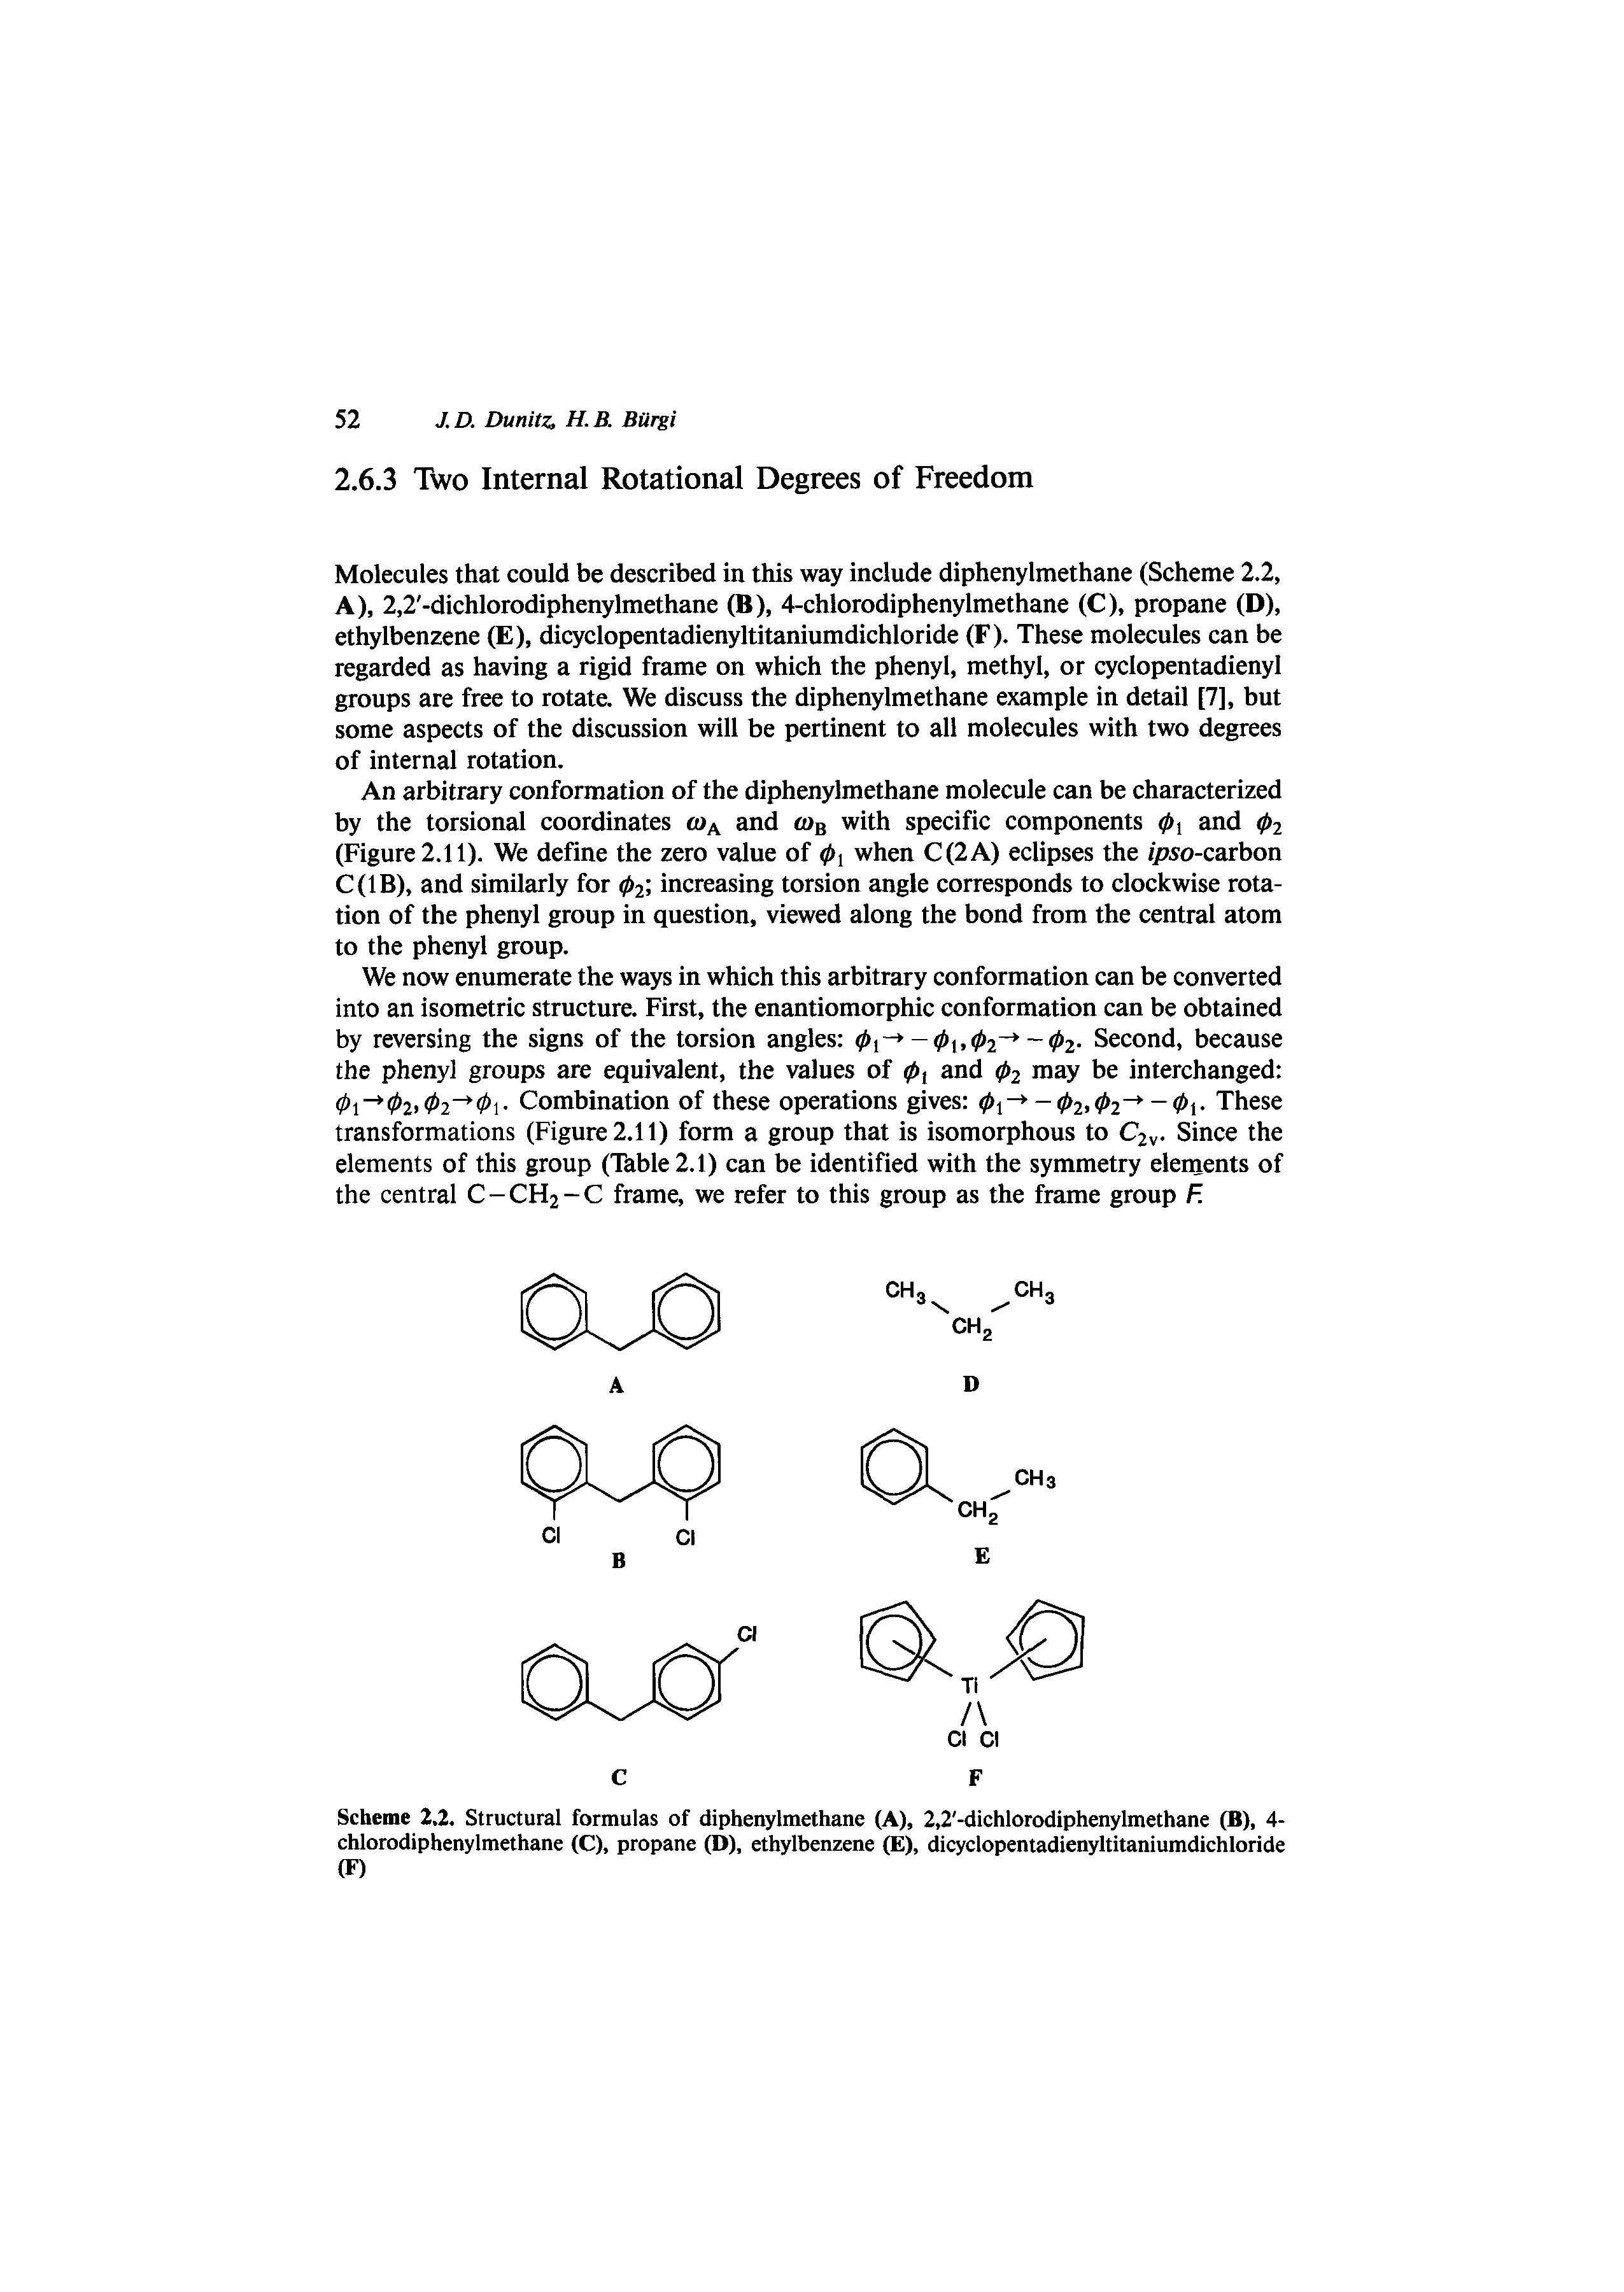 Scheme 2.2. Structural formulas of diphenylmethane (A), 2,2 -dichlorodiphenylmethane (B), 4-chlorodiphenylmethane (C), propane (D), ethylbenzene (E), dicyclopentadienyltitaniumdichloride (F)...